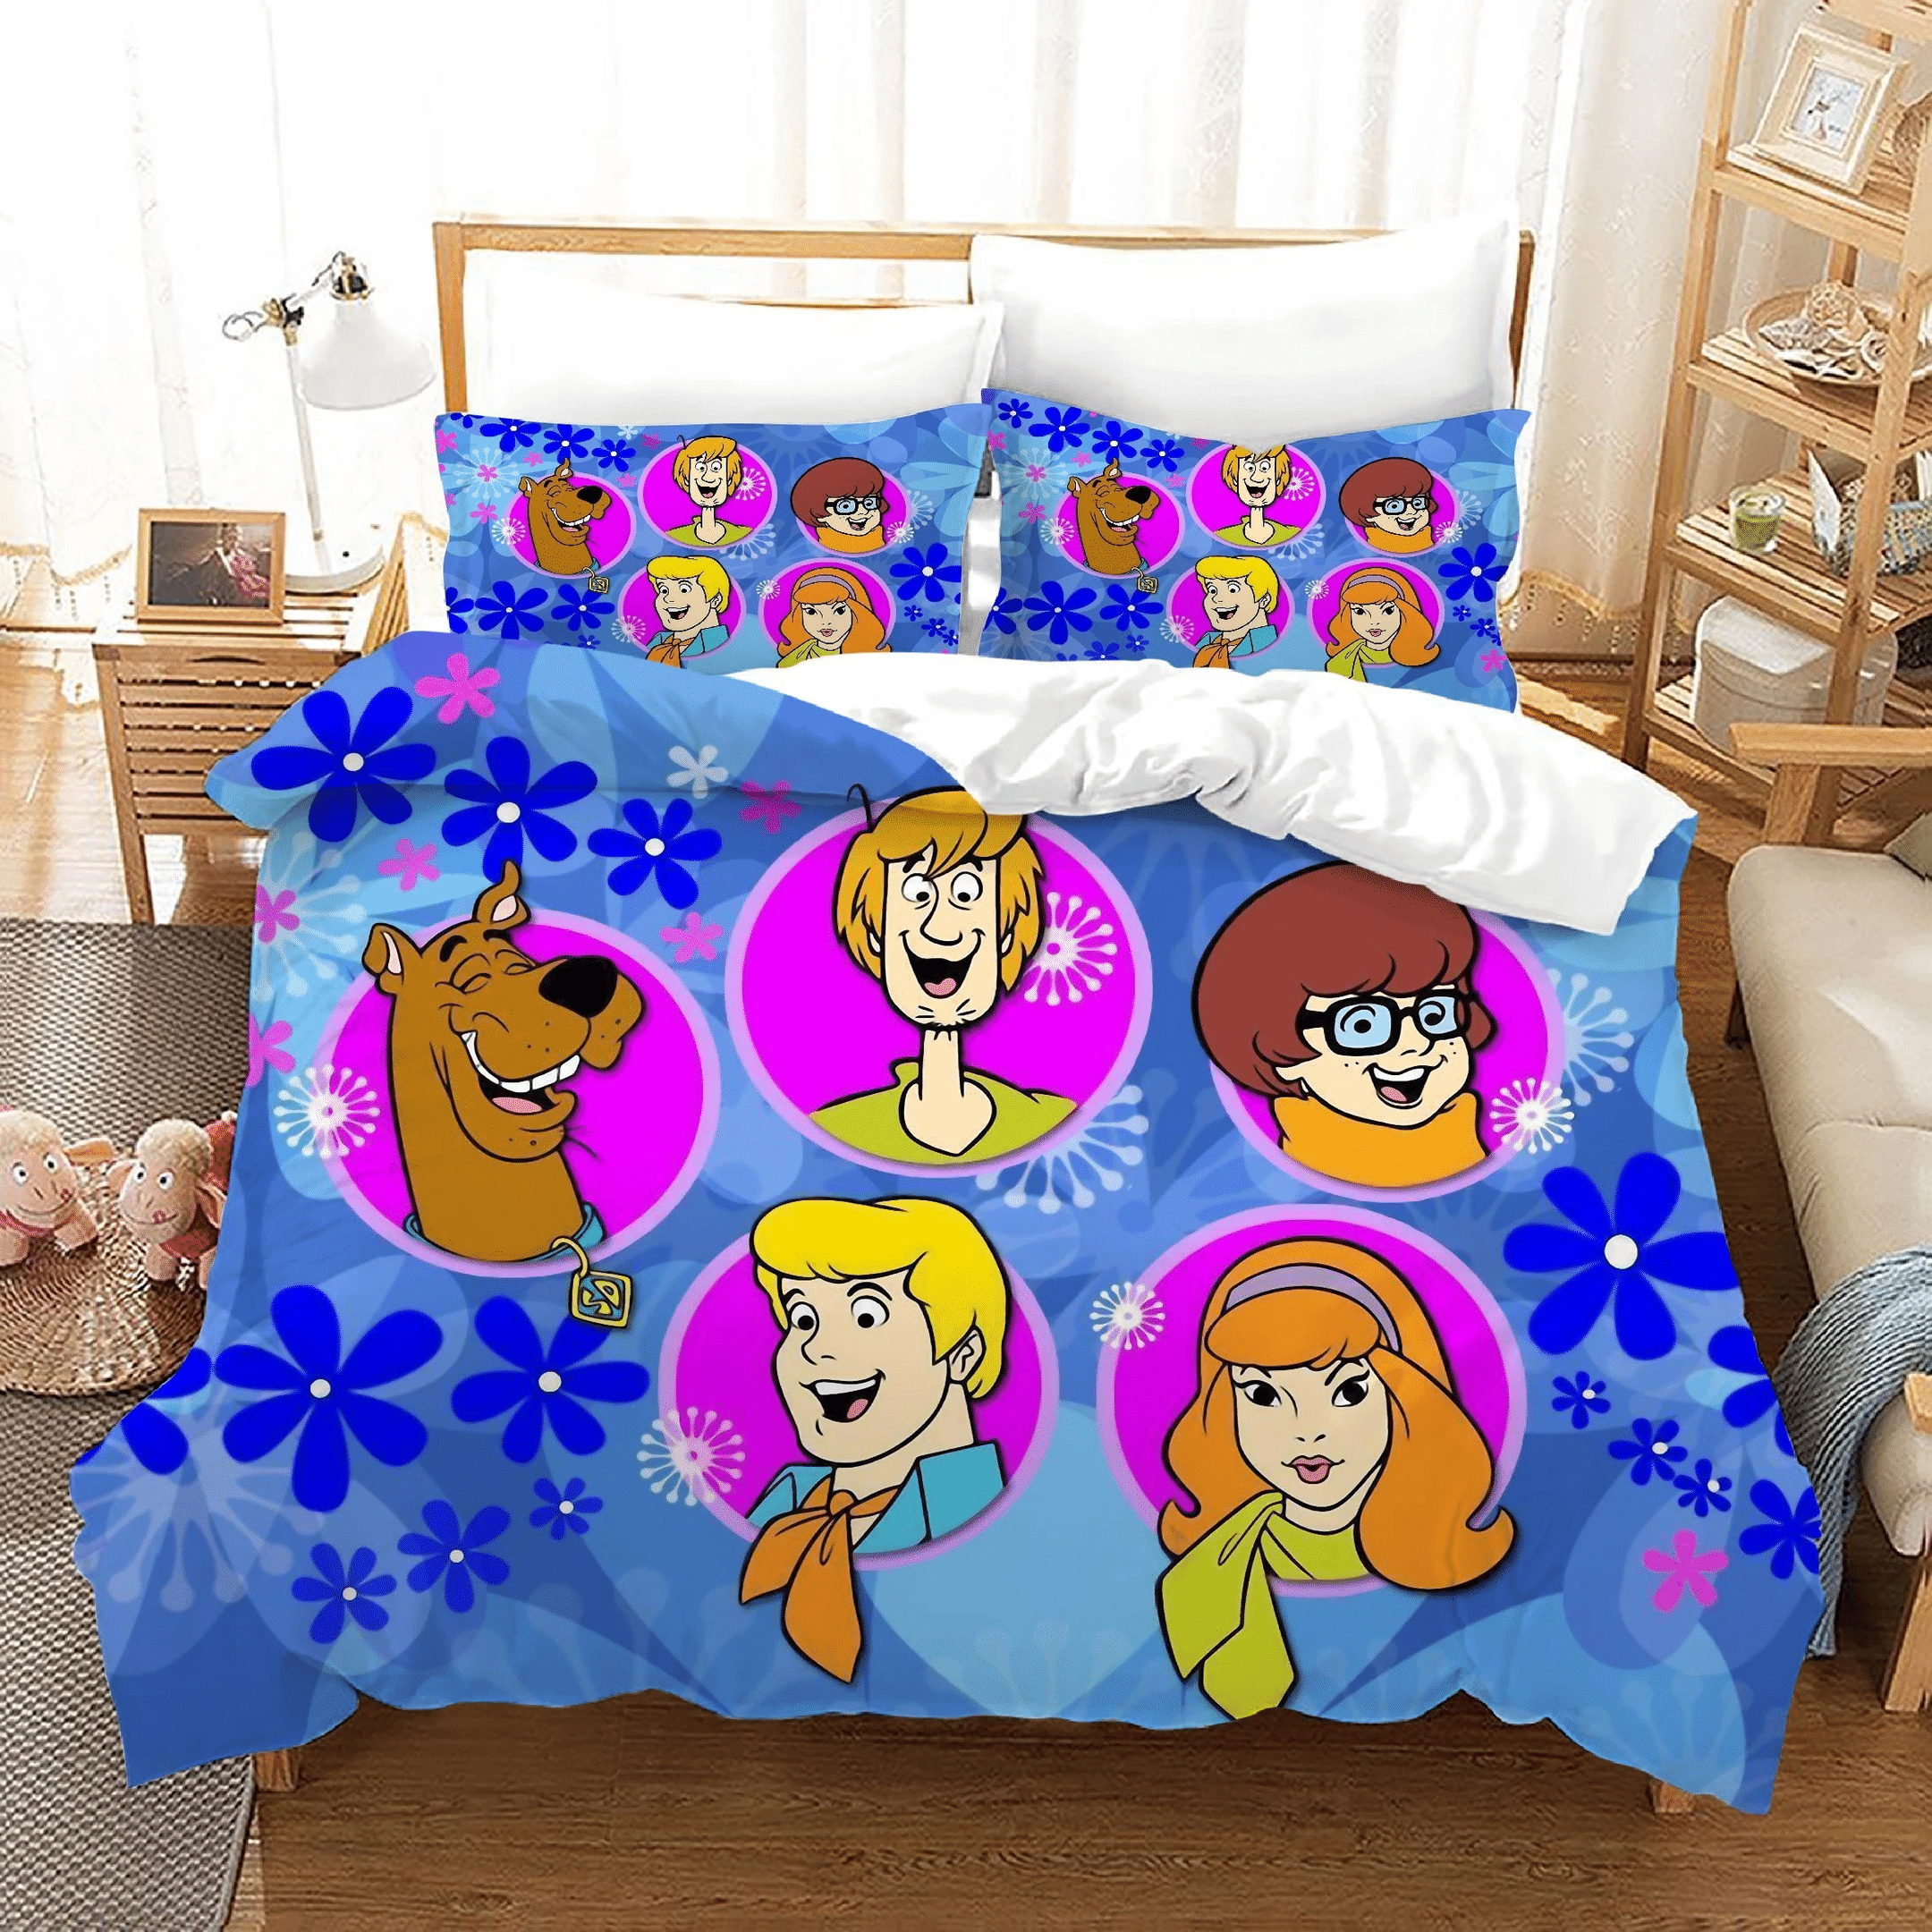 Scooby Doo 4 Duvet Cover Pillowcase Bedding Sets Home Bedroom